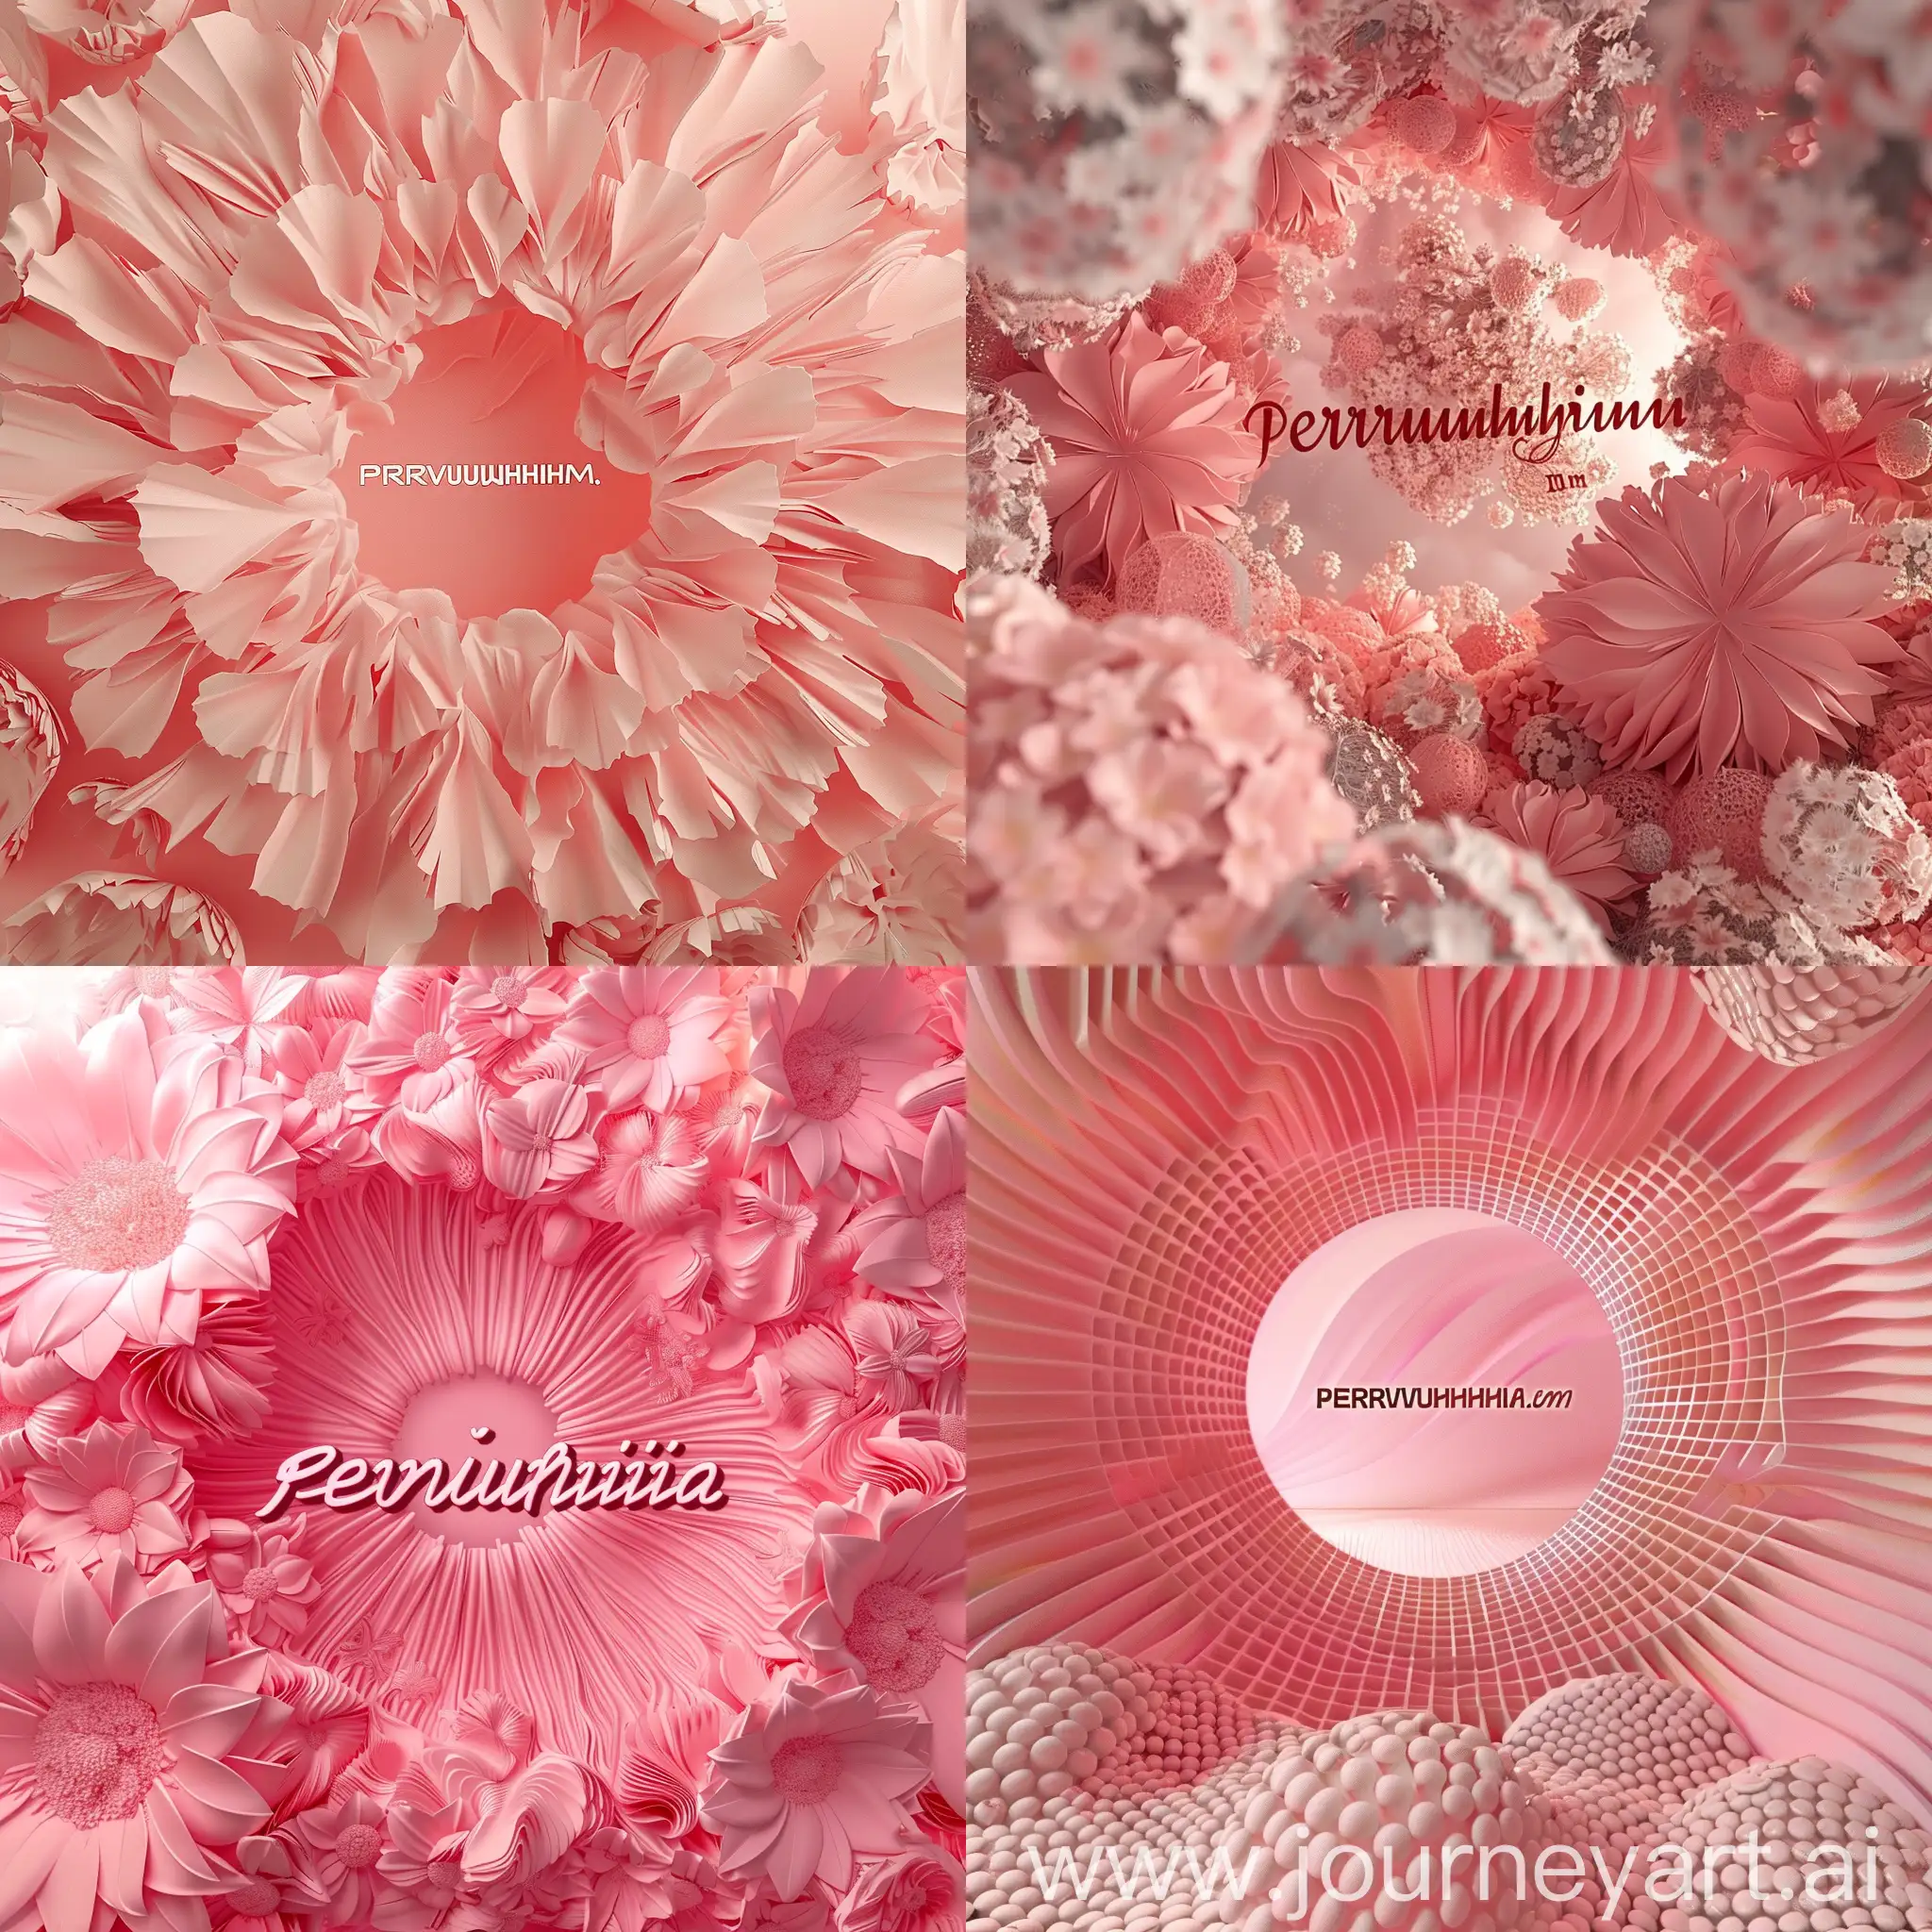 Elegant-Pink-Volumetric-Photo-with-Pervukhinapm-Inscription